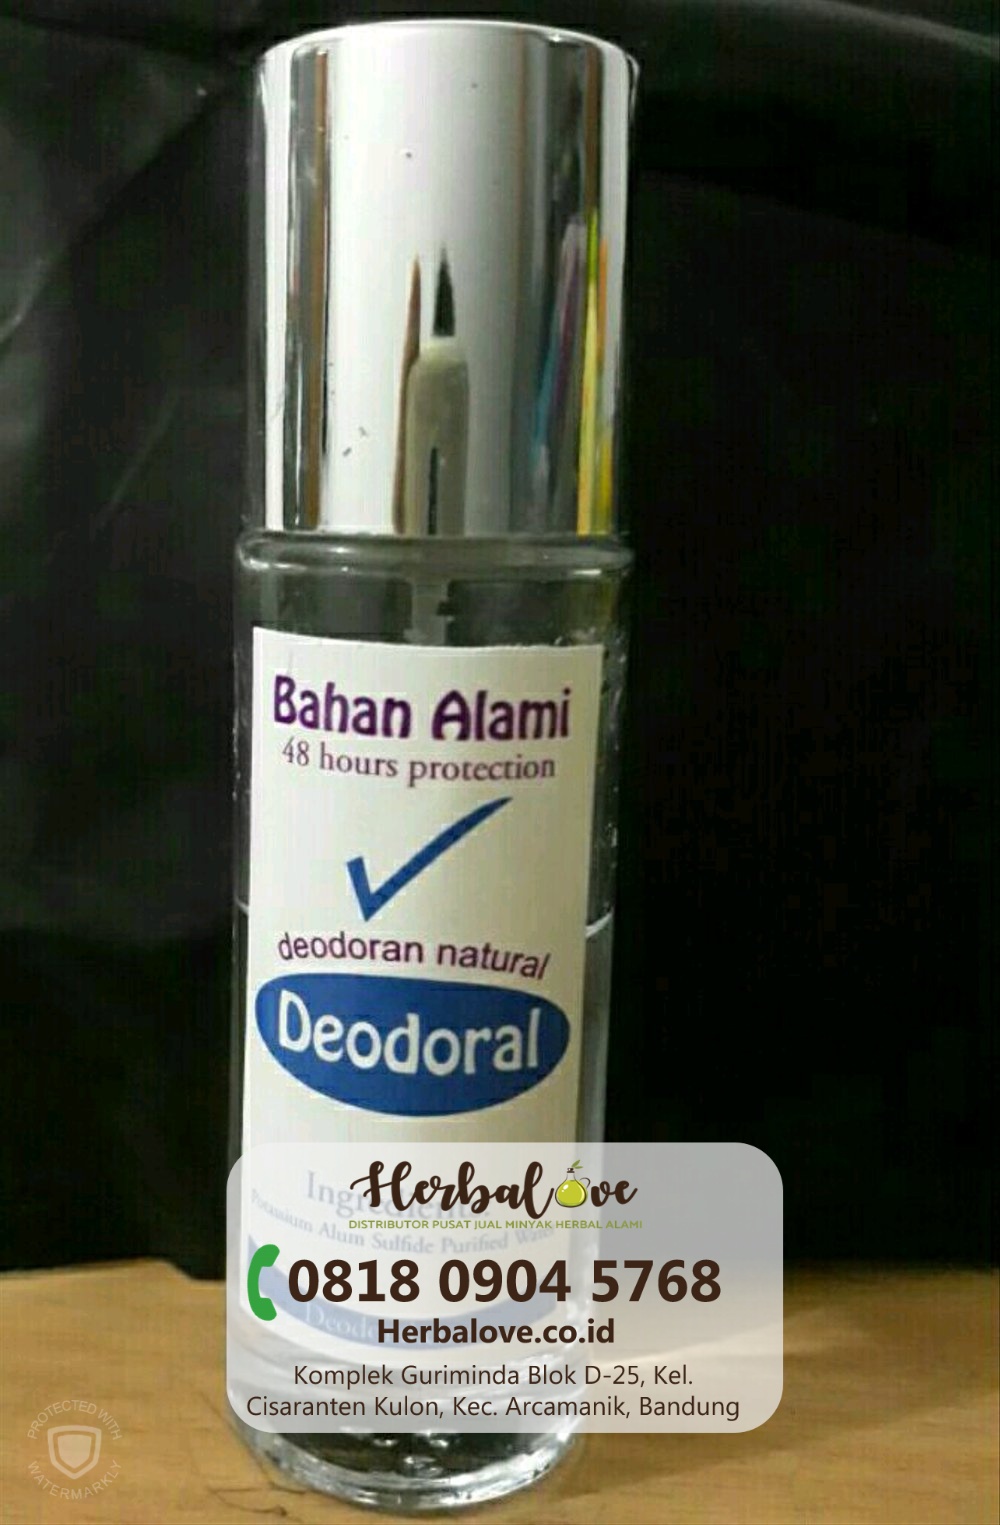 harga deodorant alami deodoral Jakarta Timur